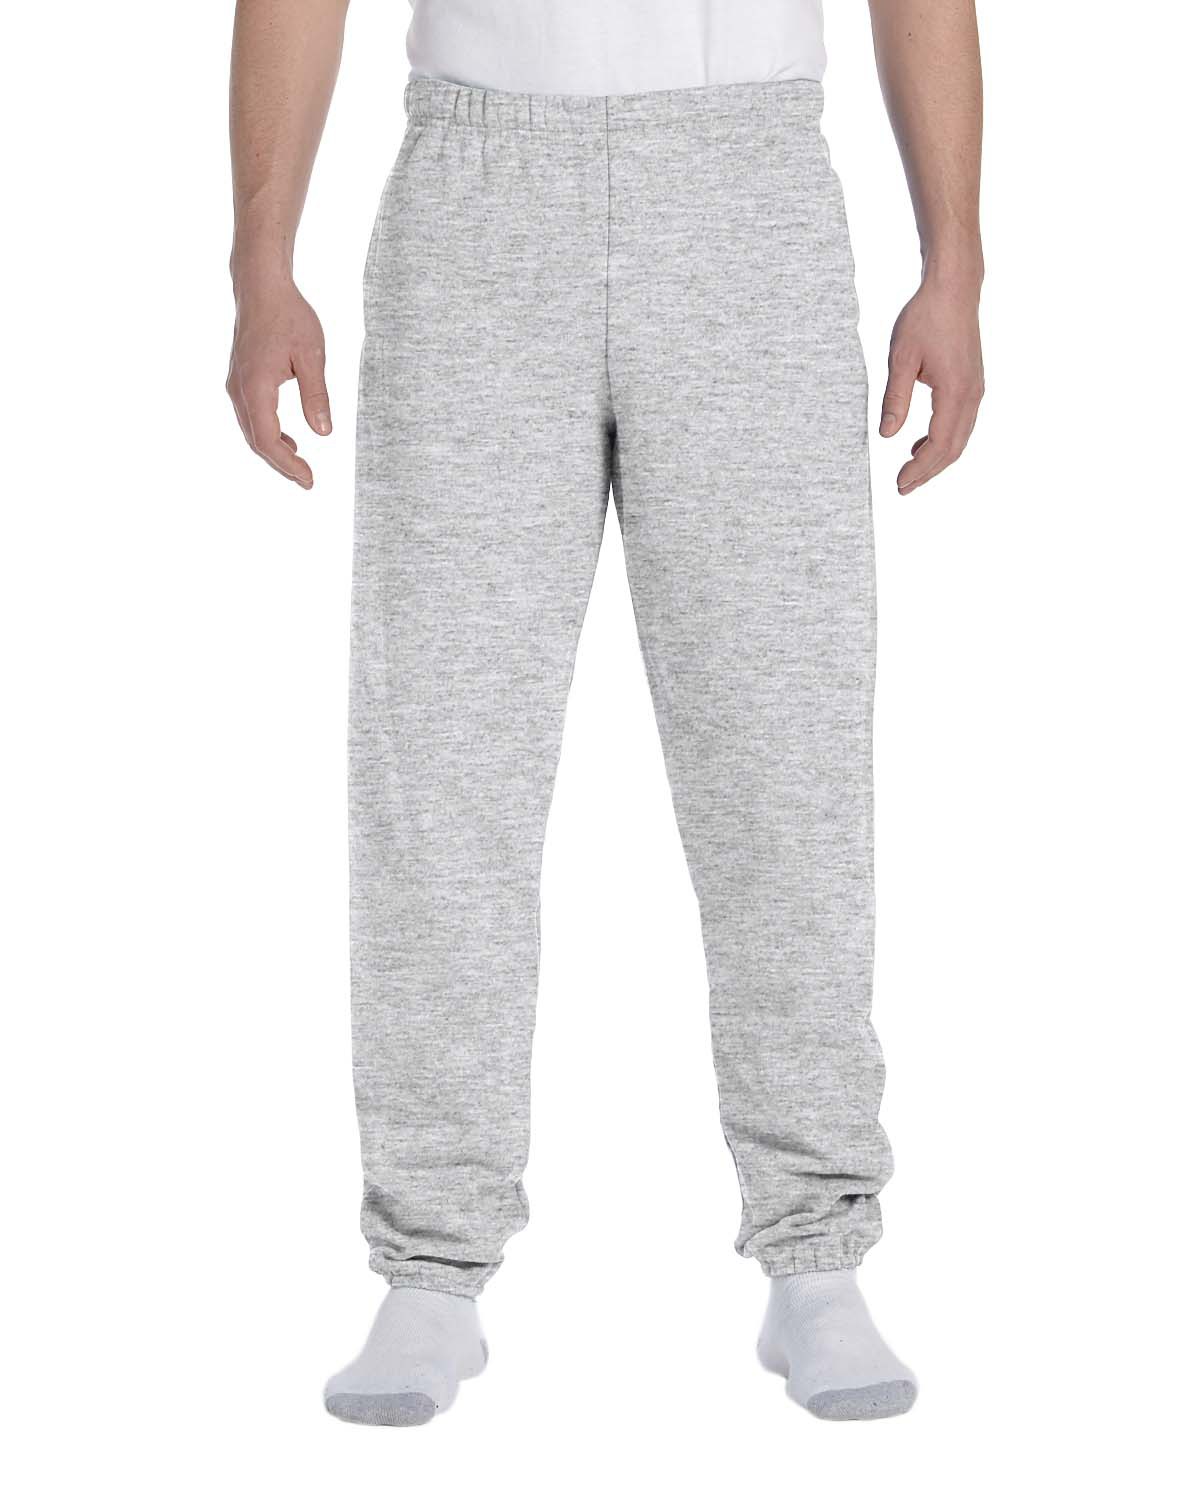 Jerzees 4850MP Super Sweats Pocketed Sweatpants $13.48 - Men's Pants